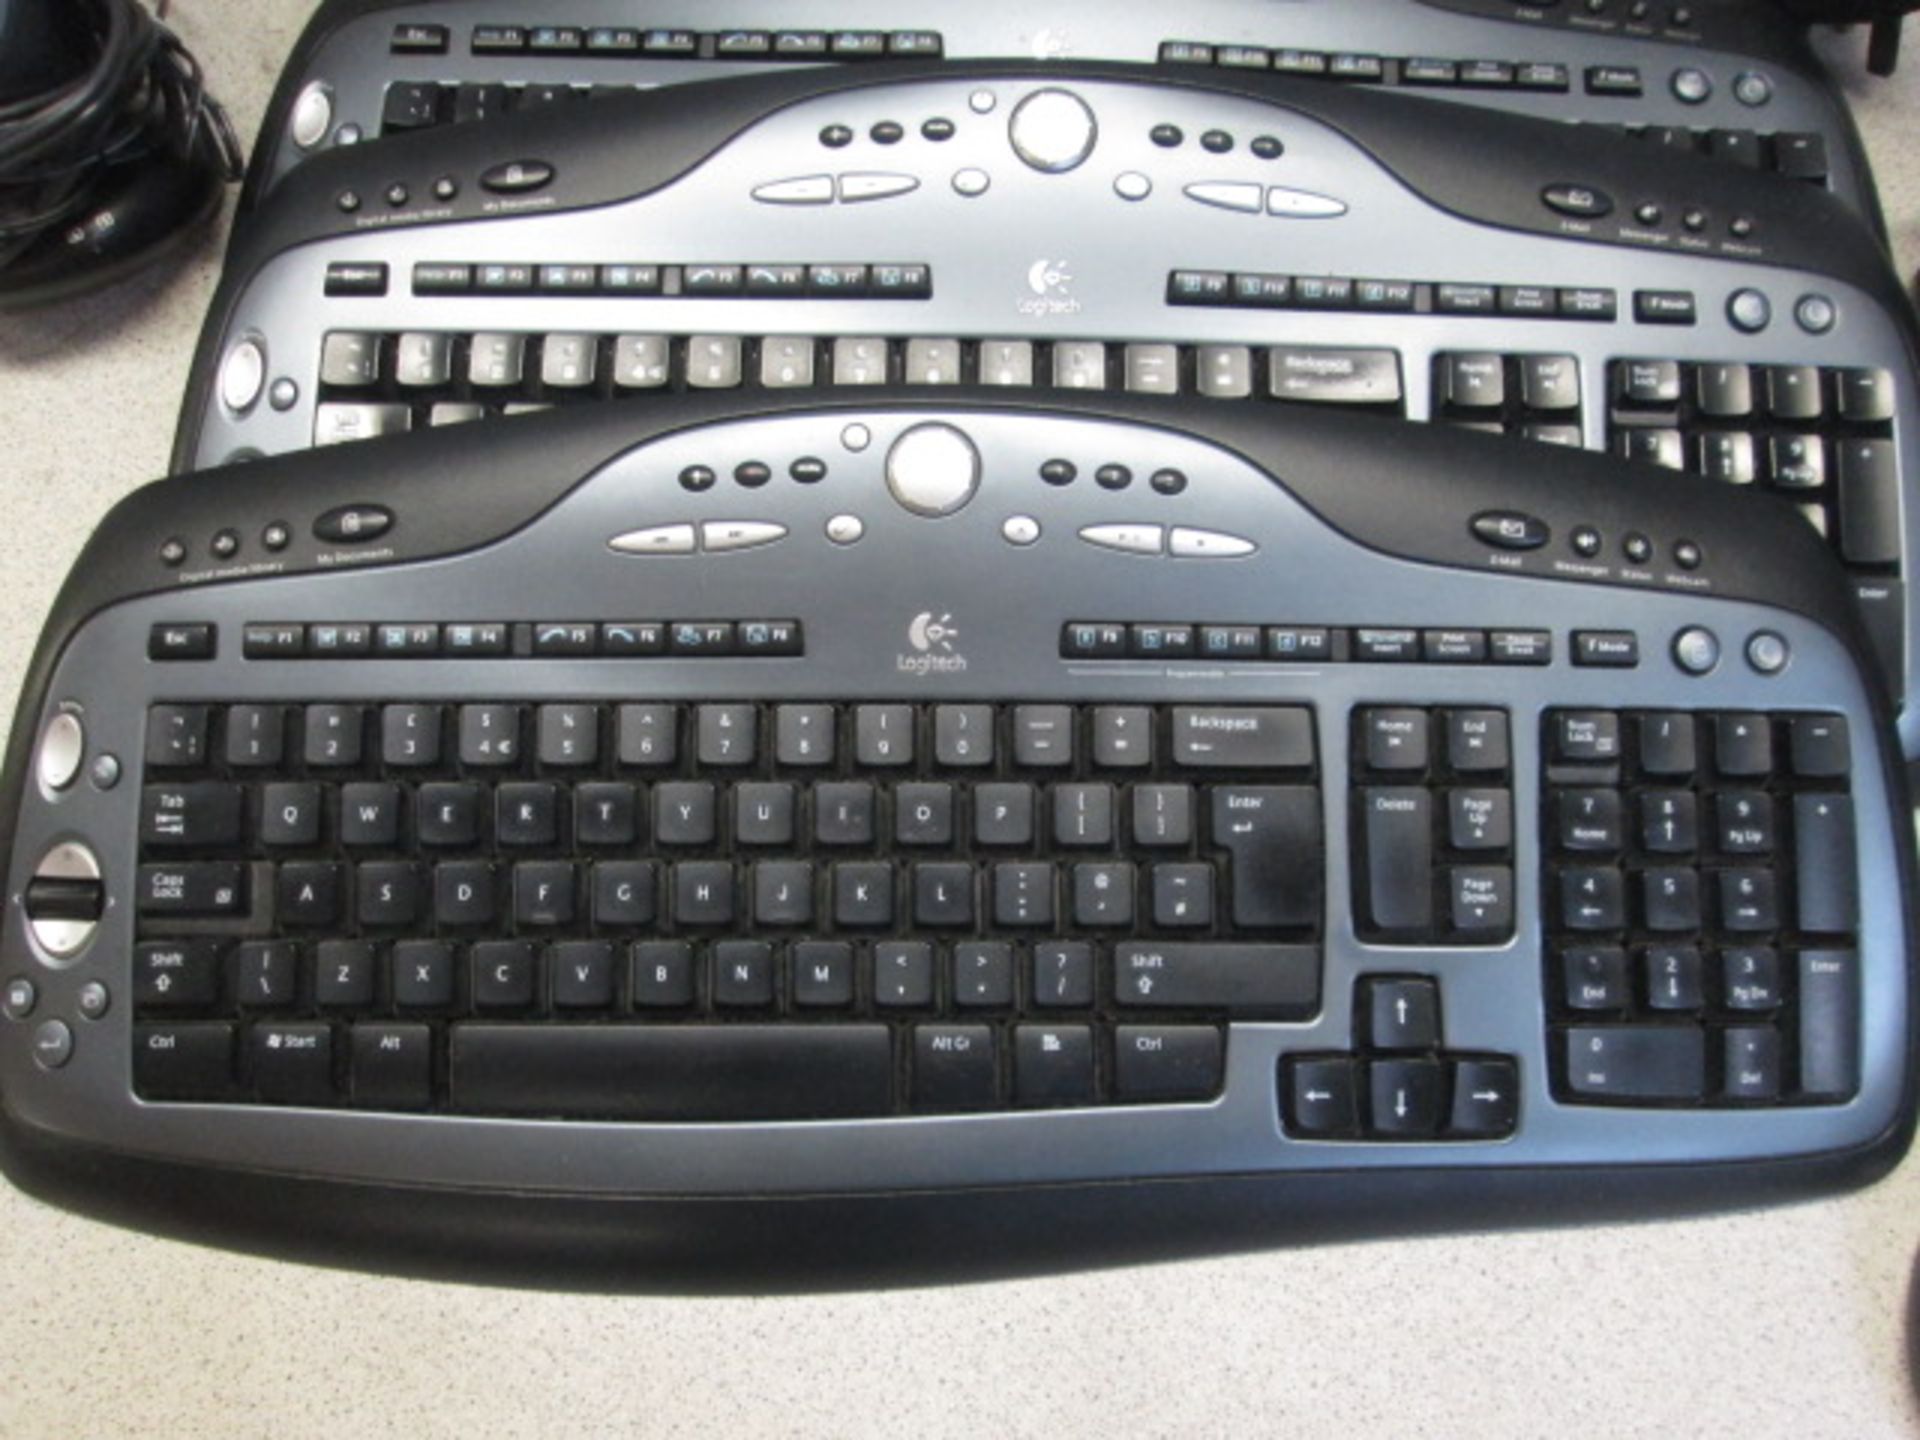 3 x Logitech Cordless Keyboards, Model Canada 10 & 3 x Logitech Click Plus Optical Mouse, Model M- - Image 2 of 4